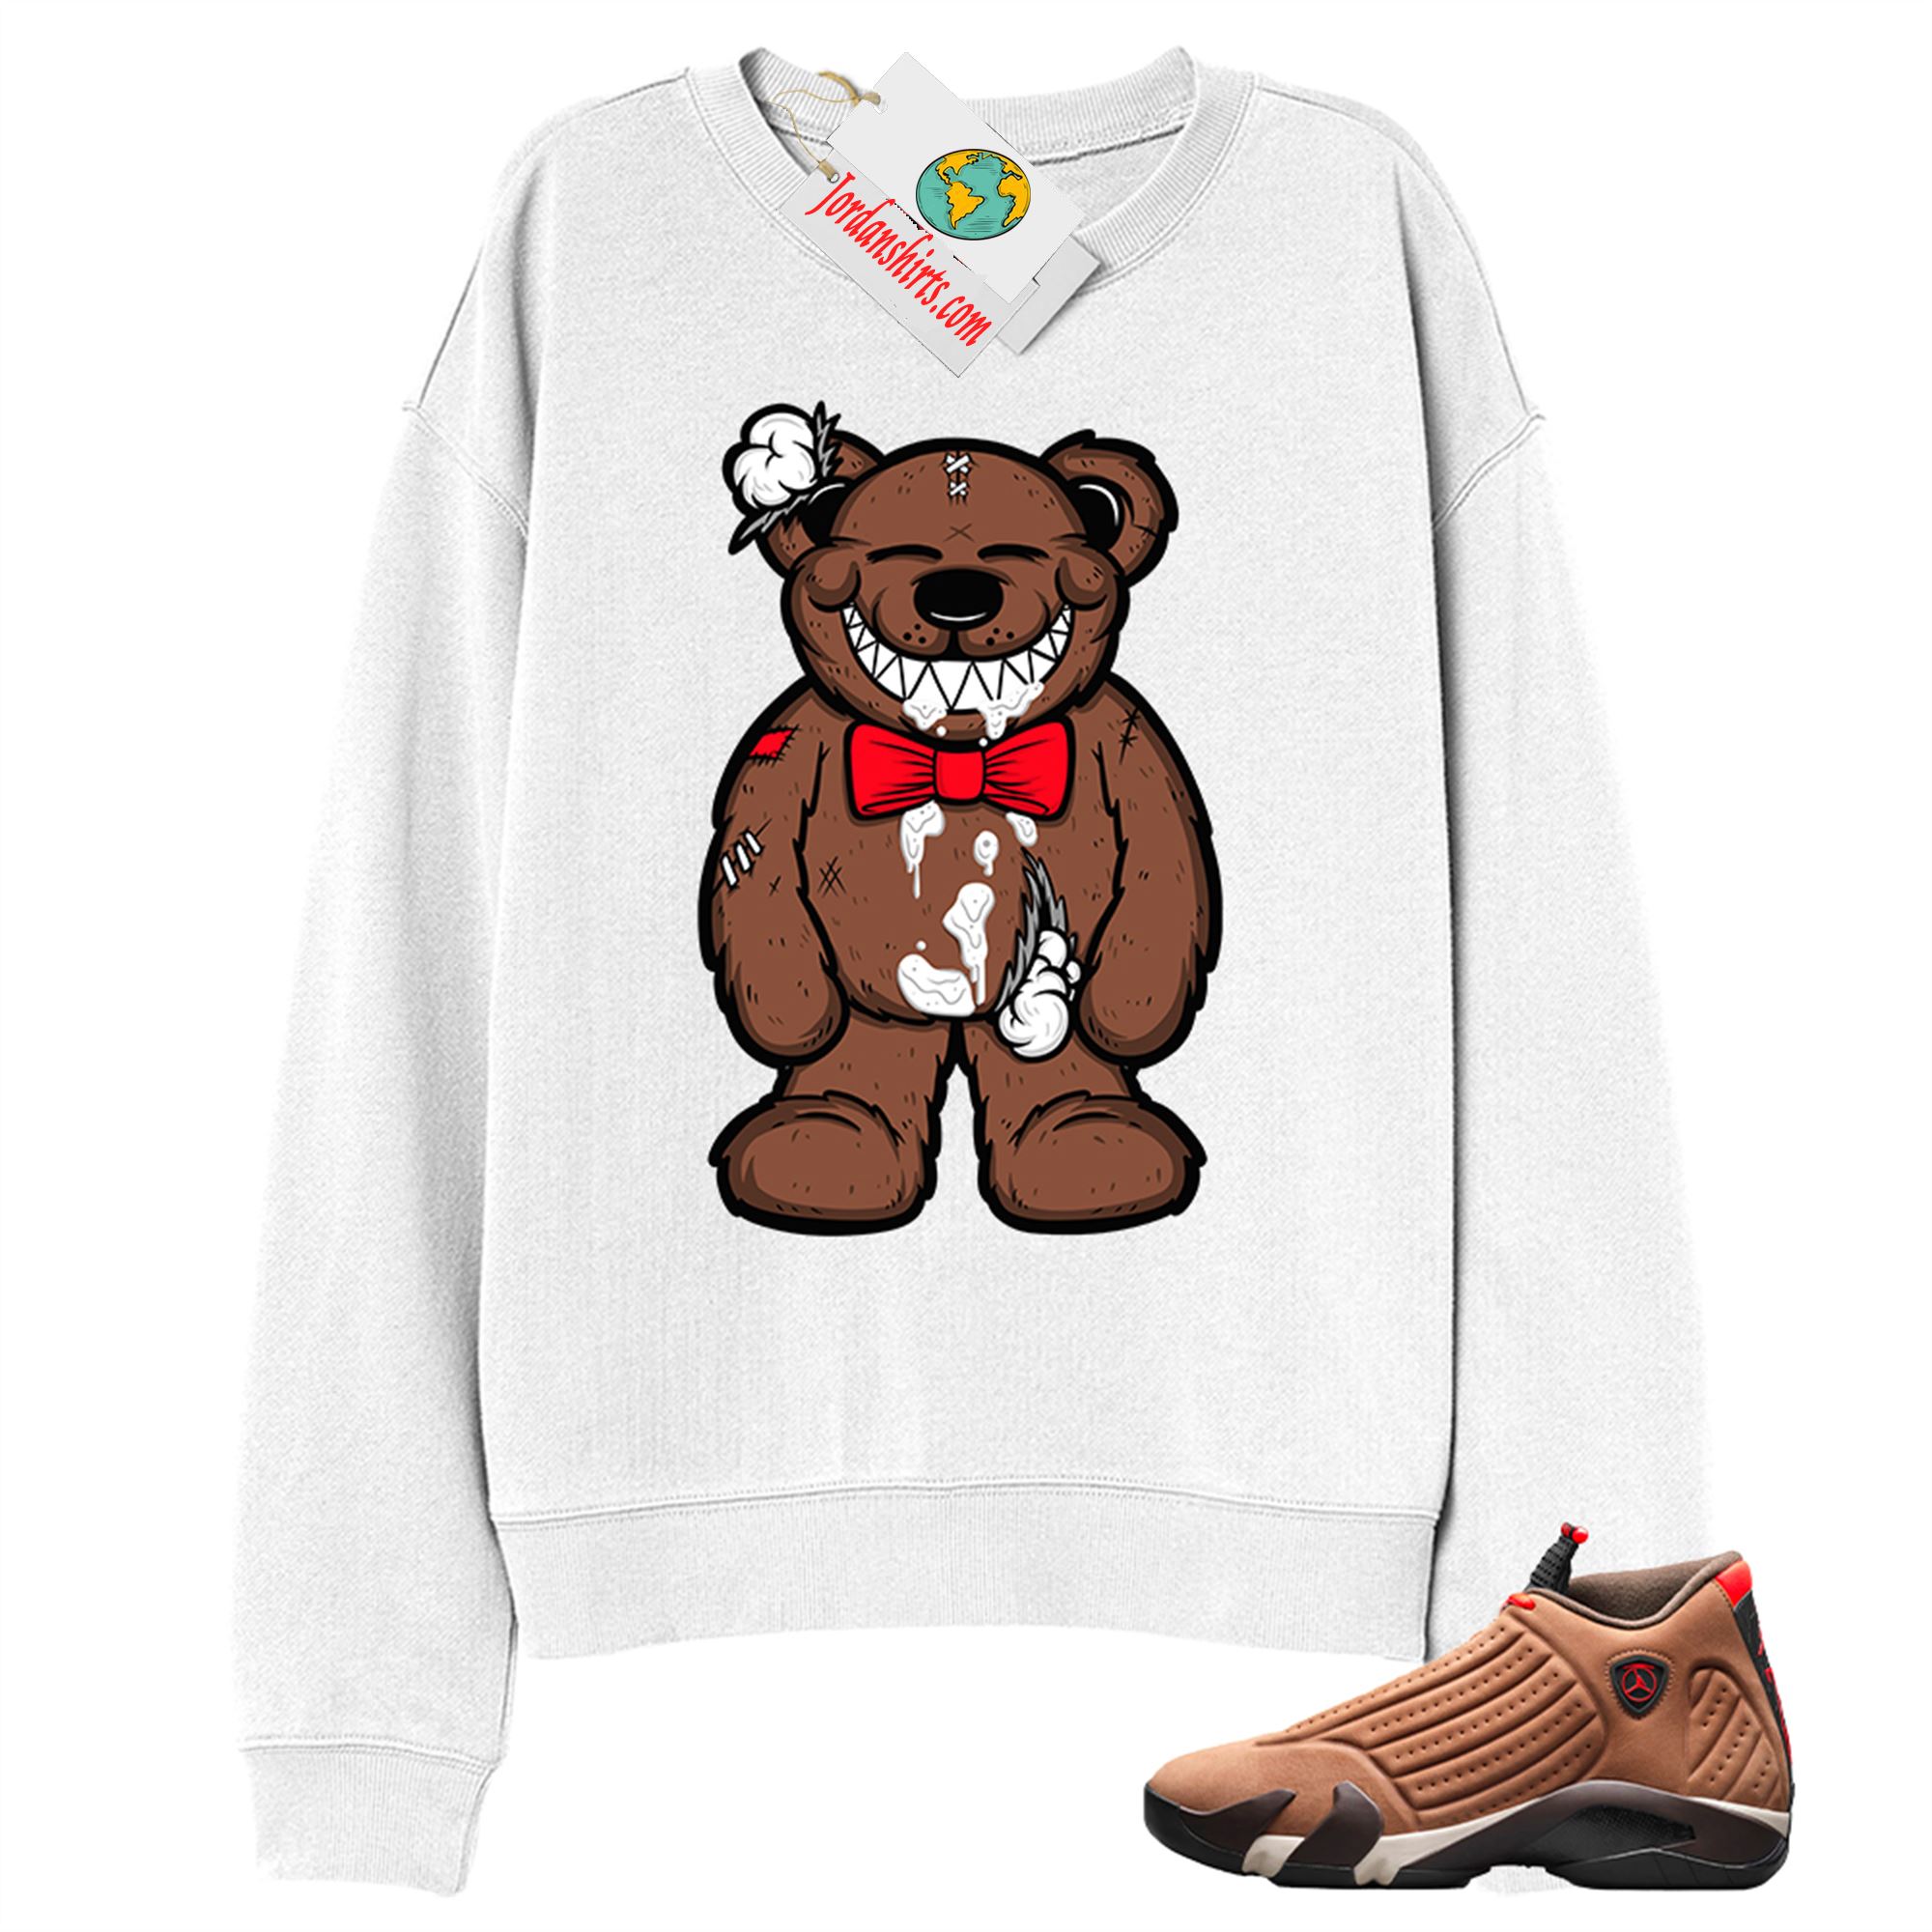 Jordan 14 Sweatshirt, Teddy Bear Smile White Sweatshirt Air Jordan 14 Winterized 14s Plus Size Up To 5xl